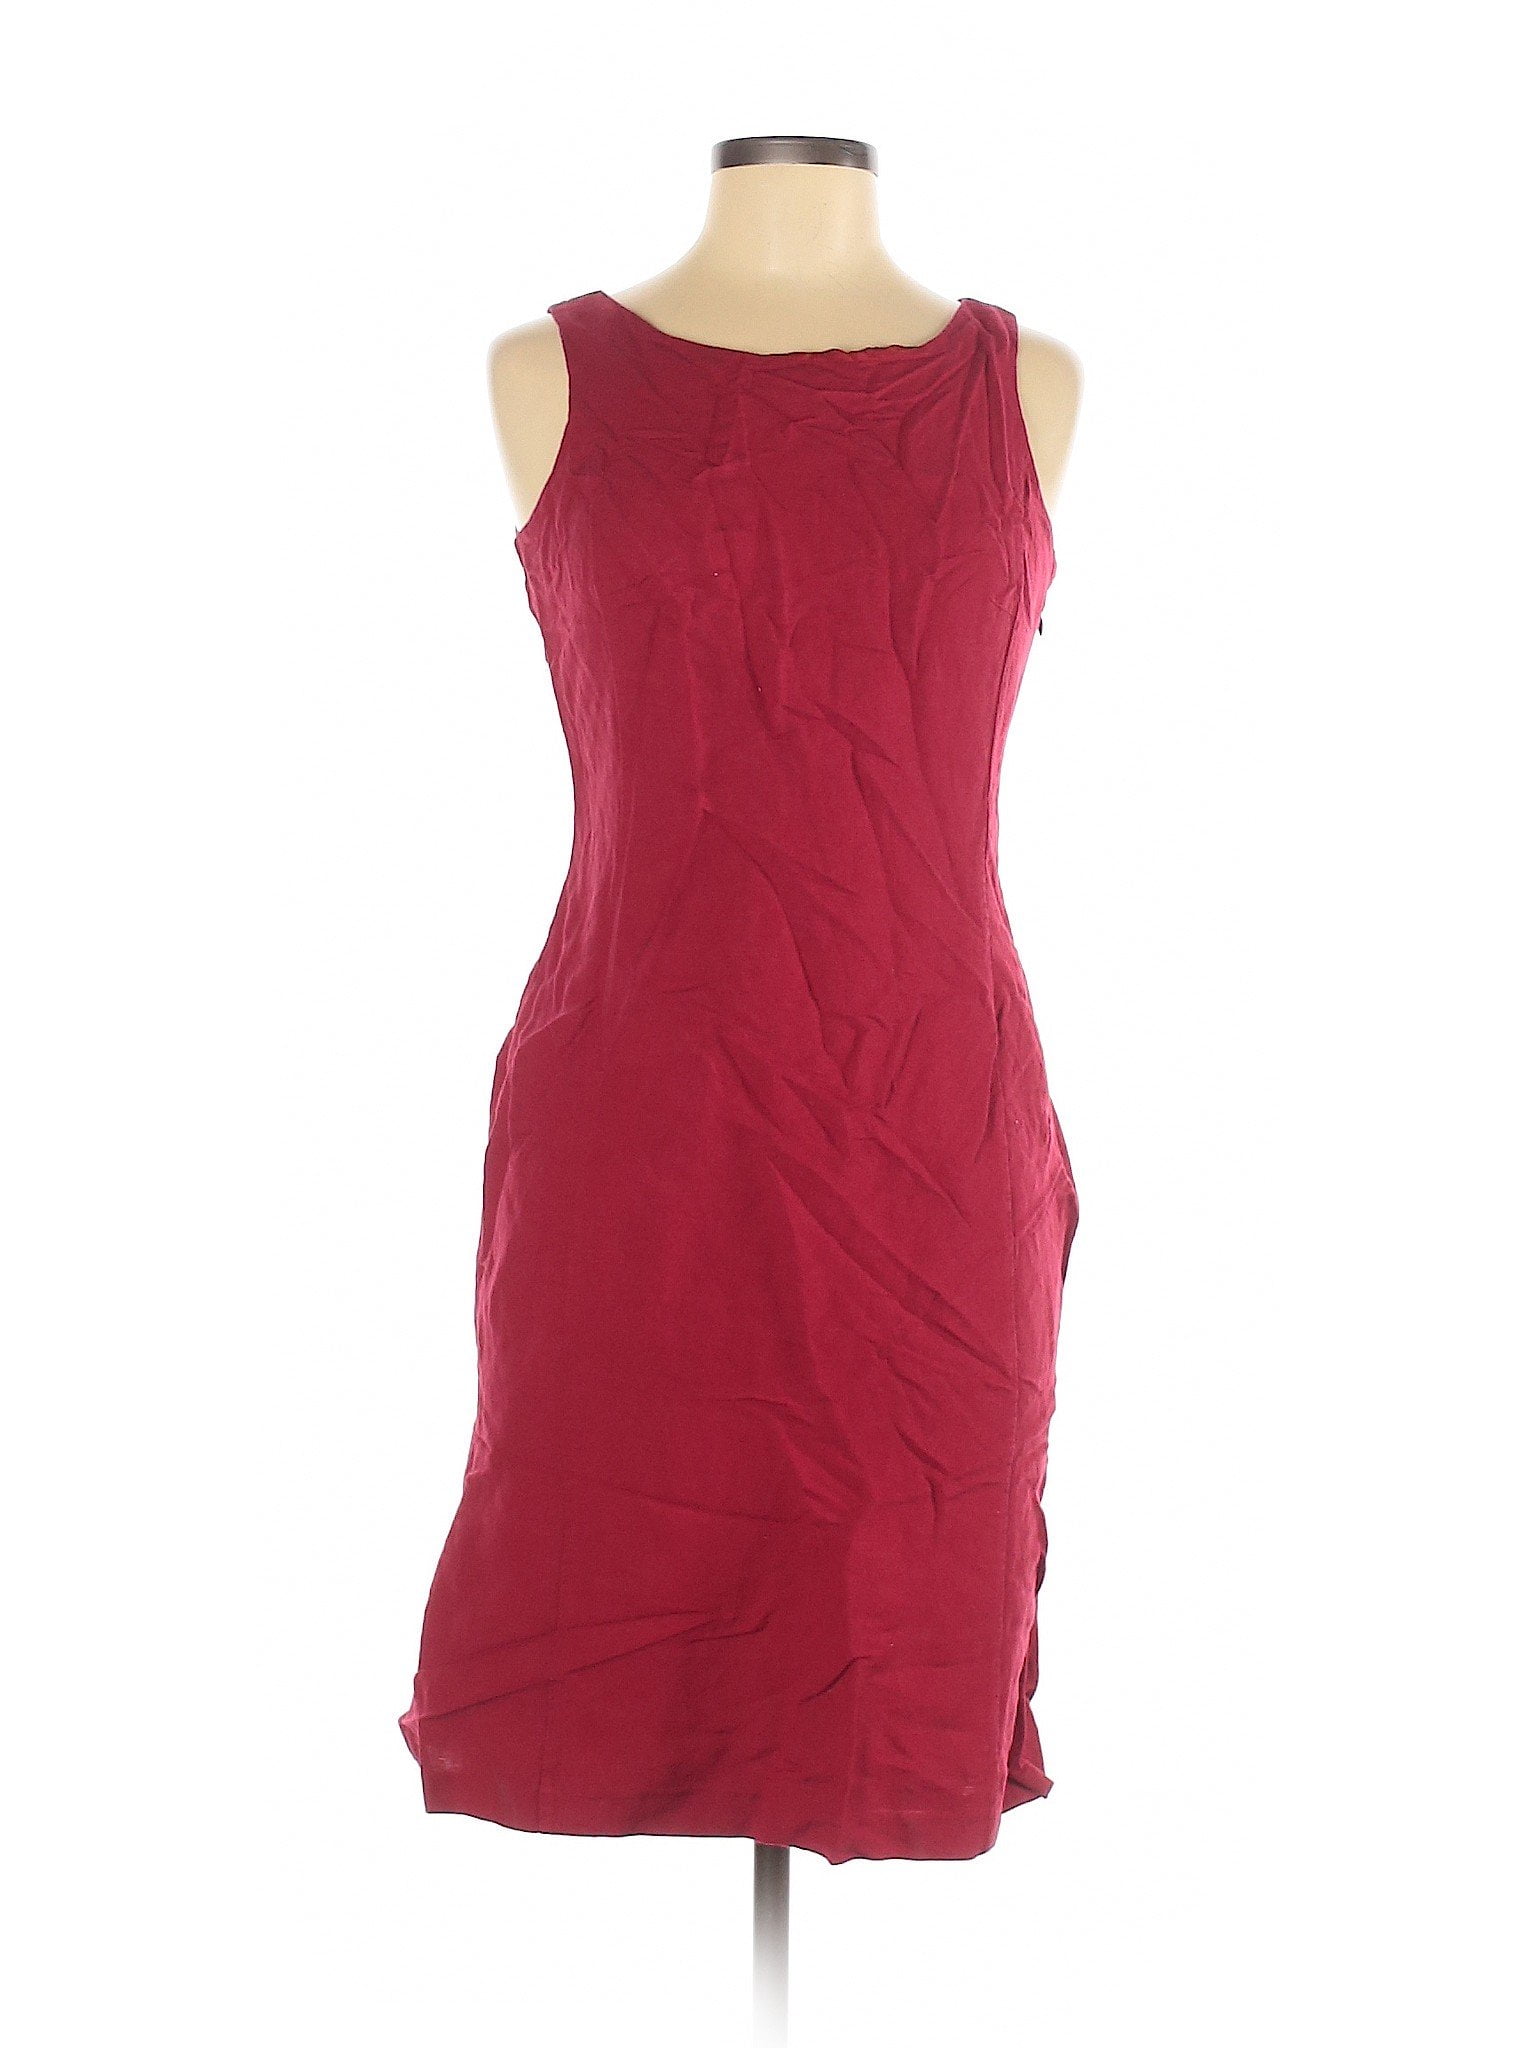 Newport News - Pre-Owned Newport News Women's Size 6 Casual Dress ...